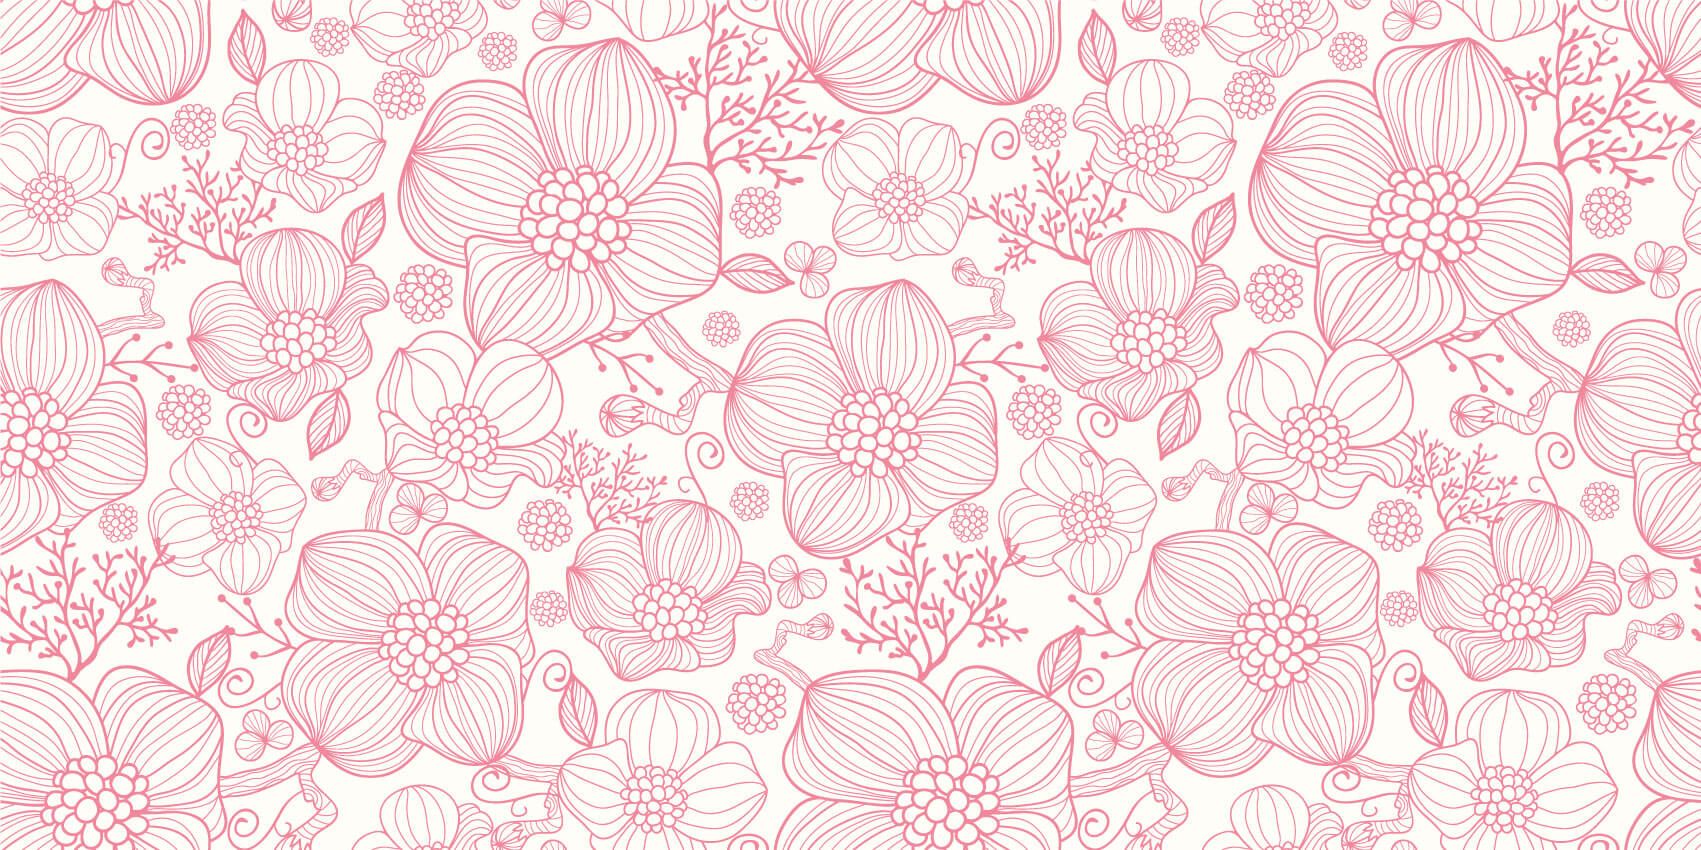 Patterns for Kidsroom - Grandes fleurs roses - Chambre à coucher